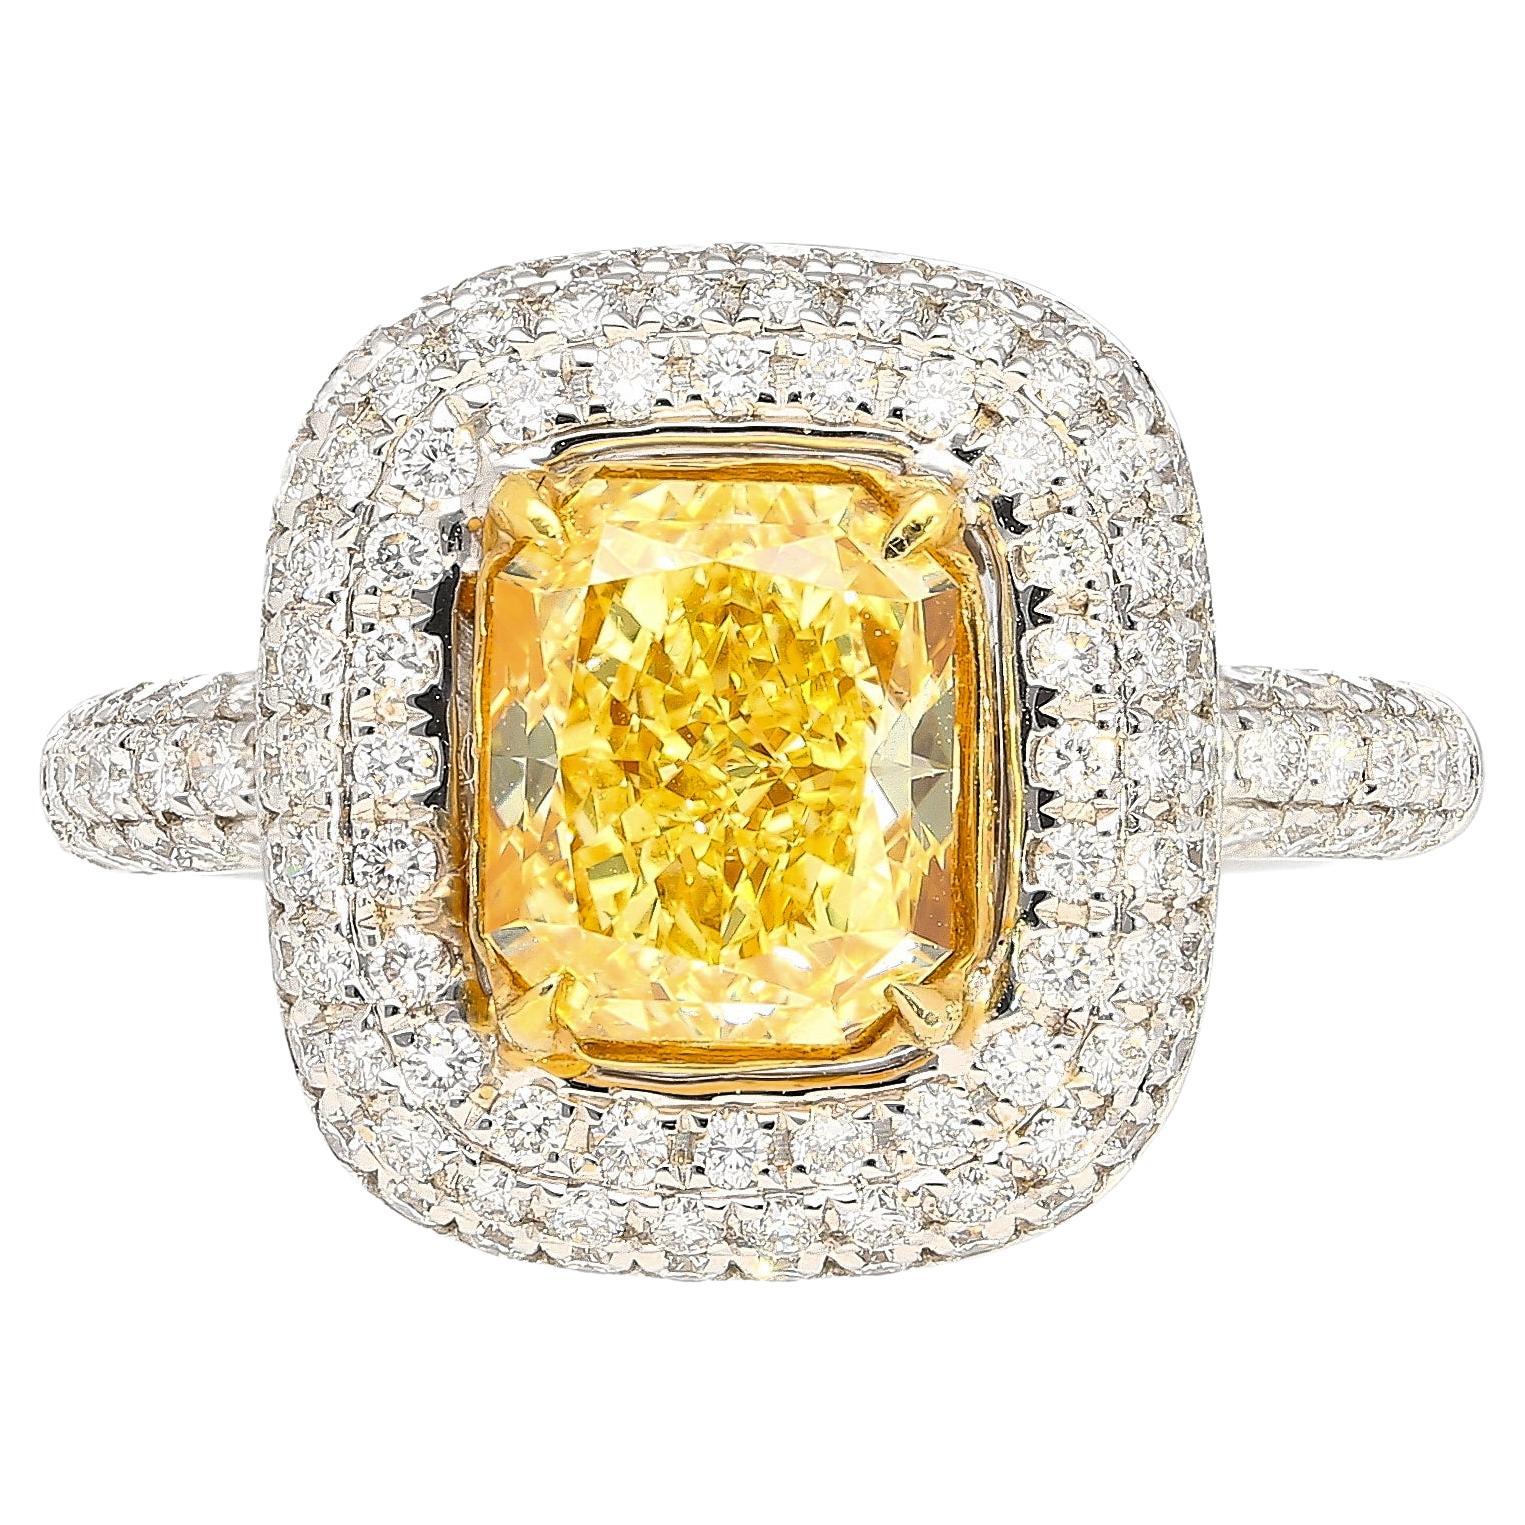 GIA Certified 2.35 Radiant Cut Fancy Yellow Diamond Ring in 18k White Gold